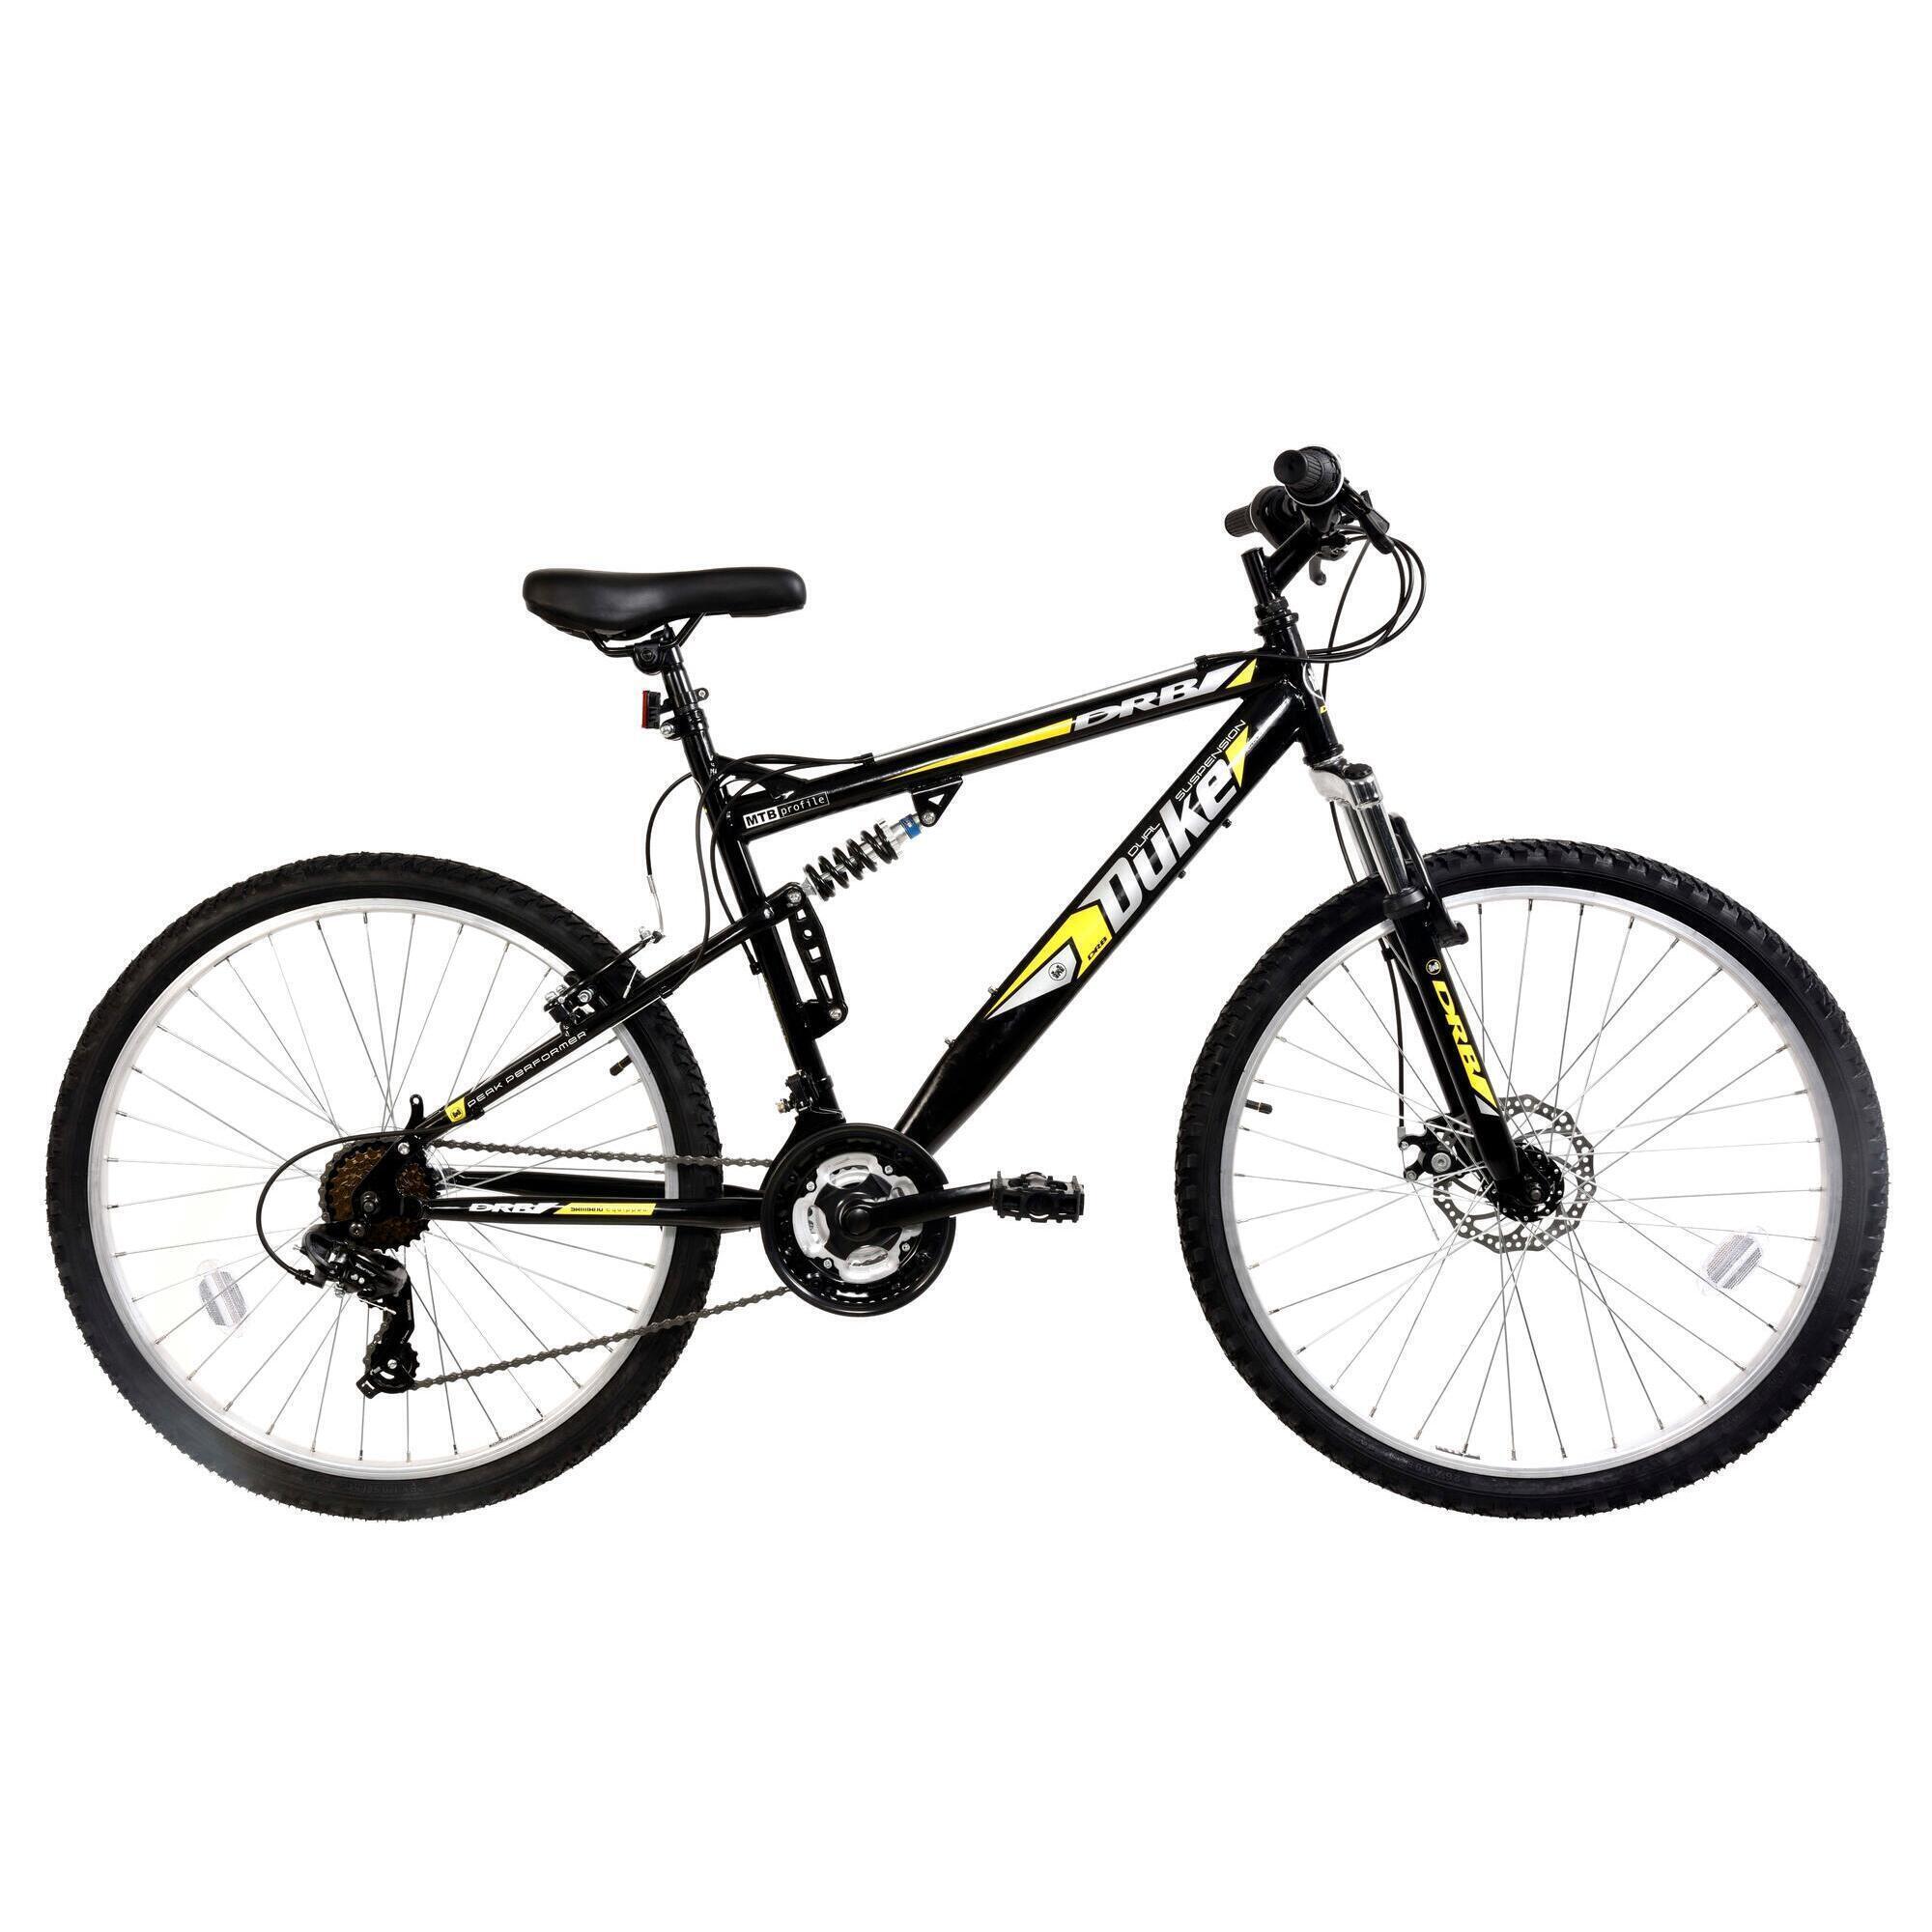 DALLINGRIDGE Dallingridge Duke Full Suspension Mountain Bike, 26In Wheel - Black/Yellow